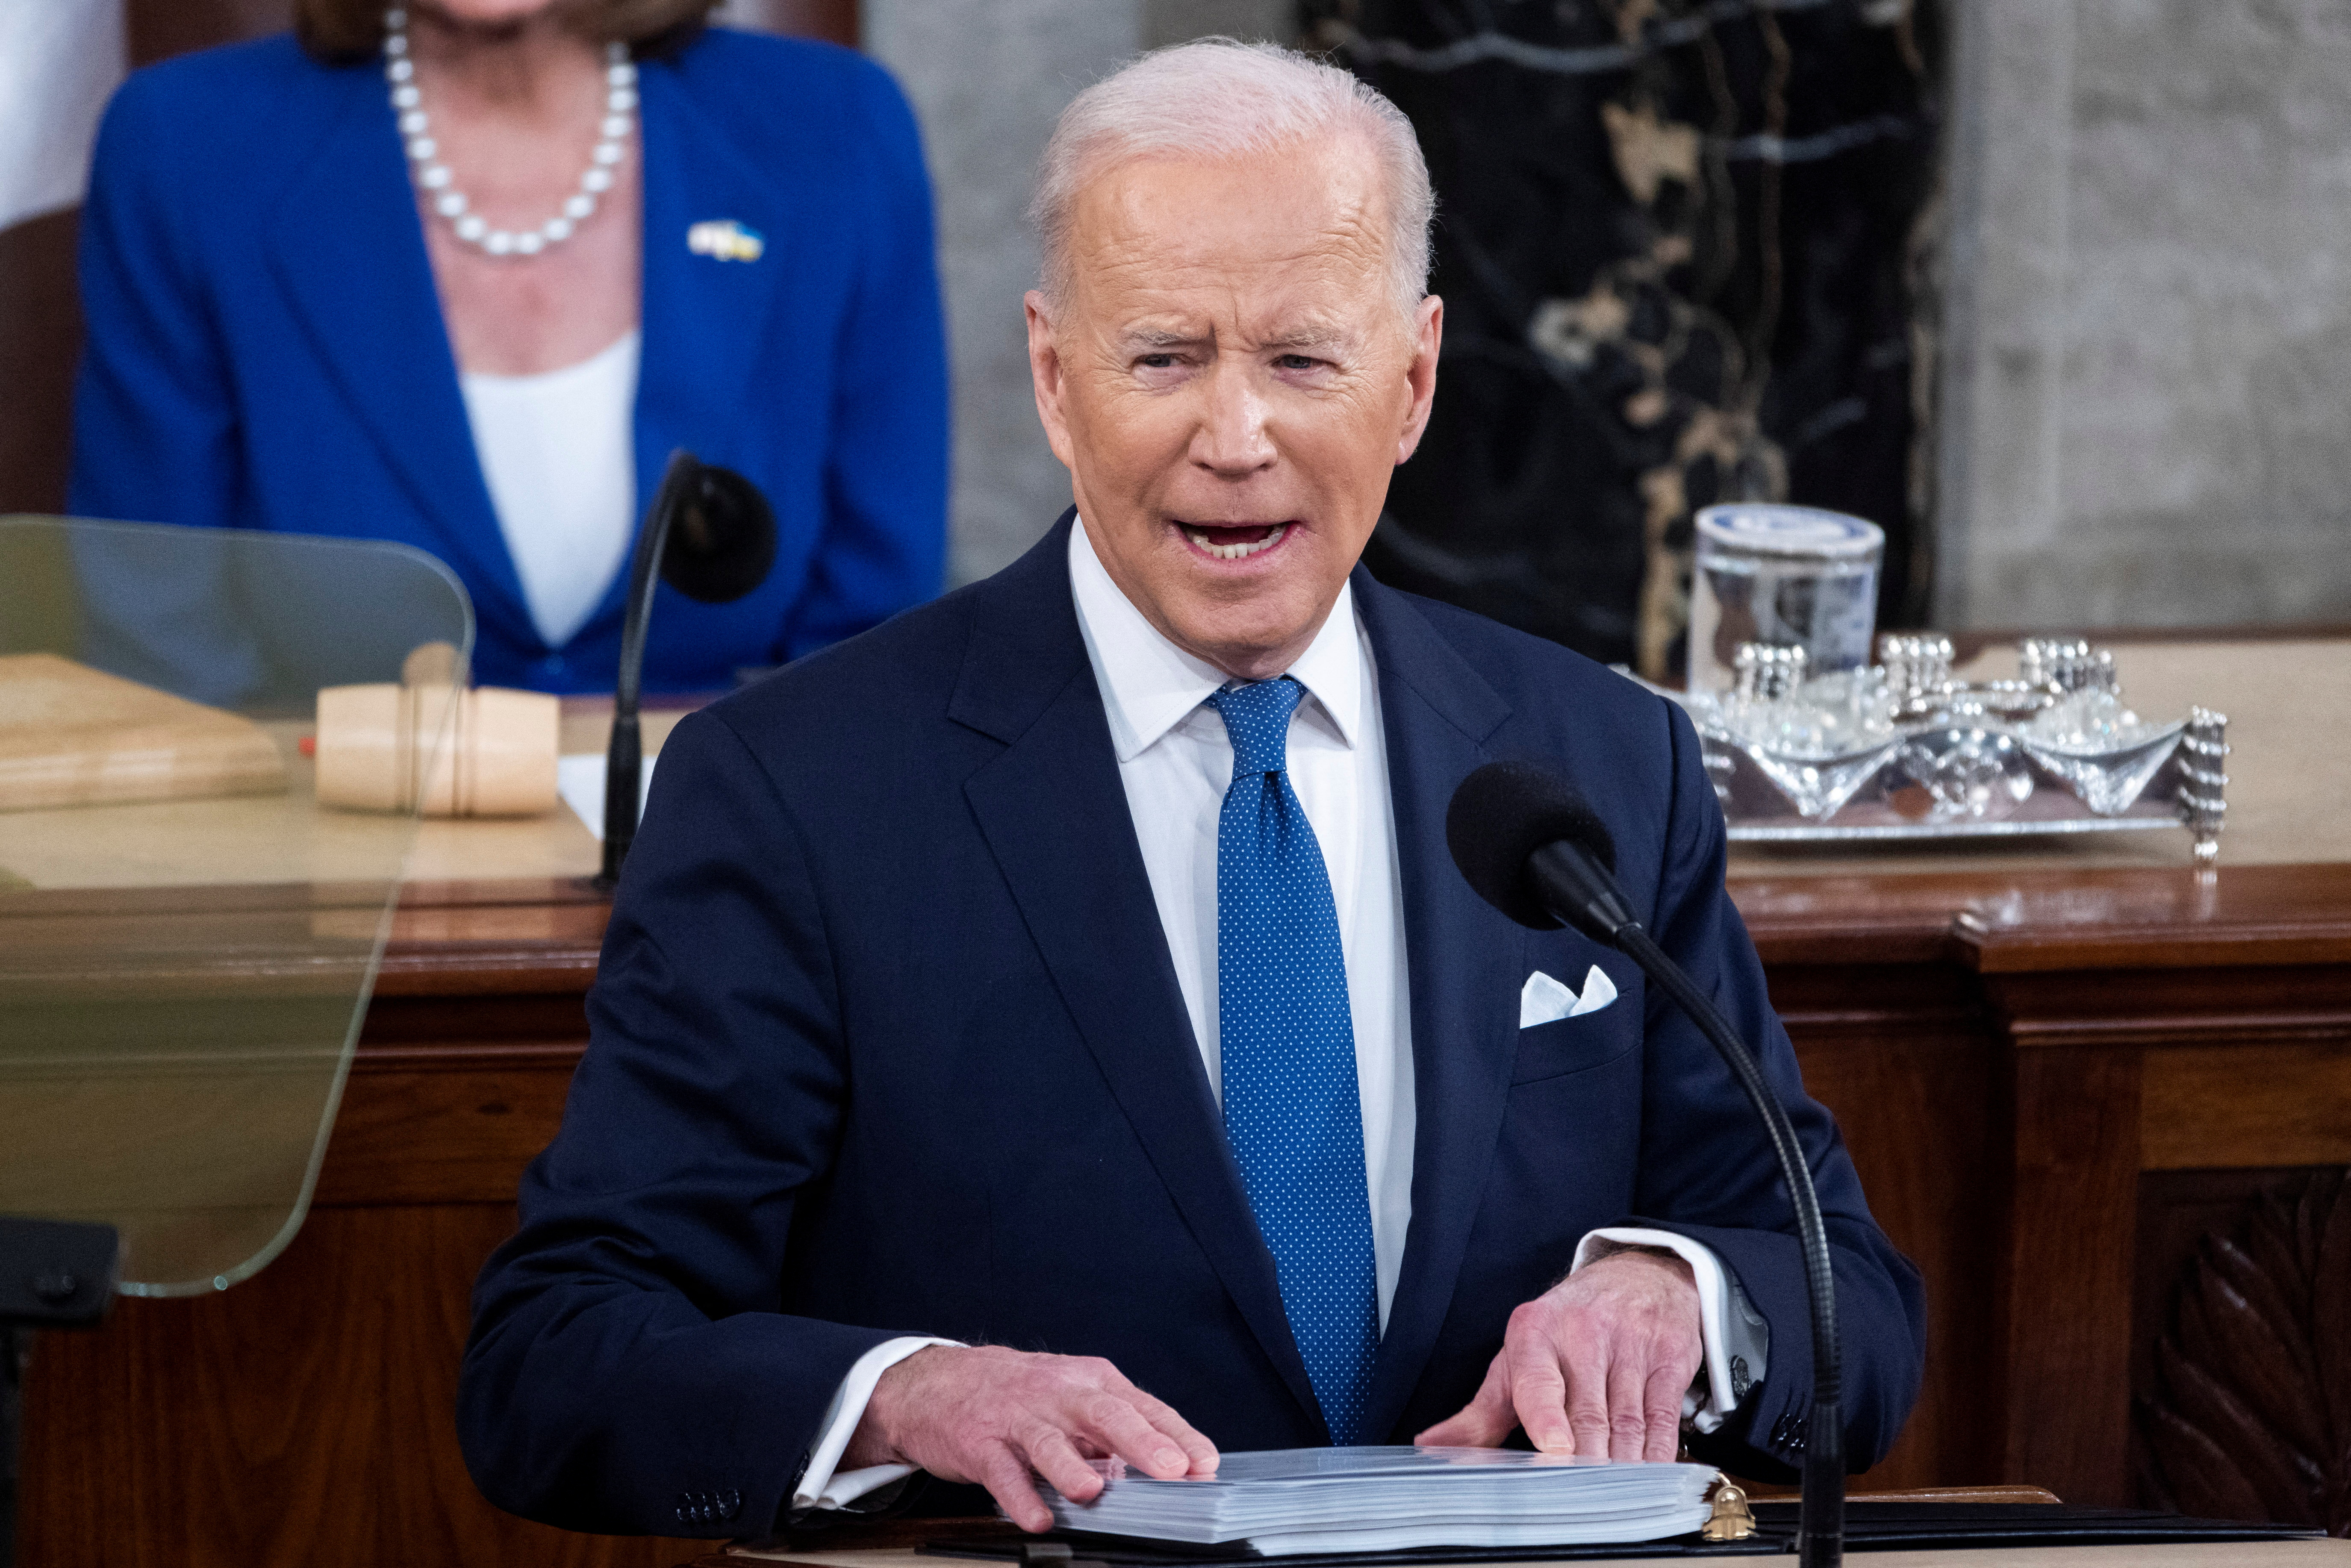 U.S. President Joe Biden’s State of the Union address at the U.S. Capitol in Washington